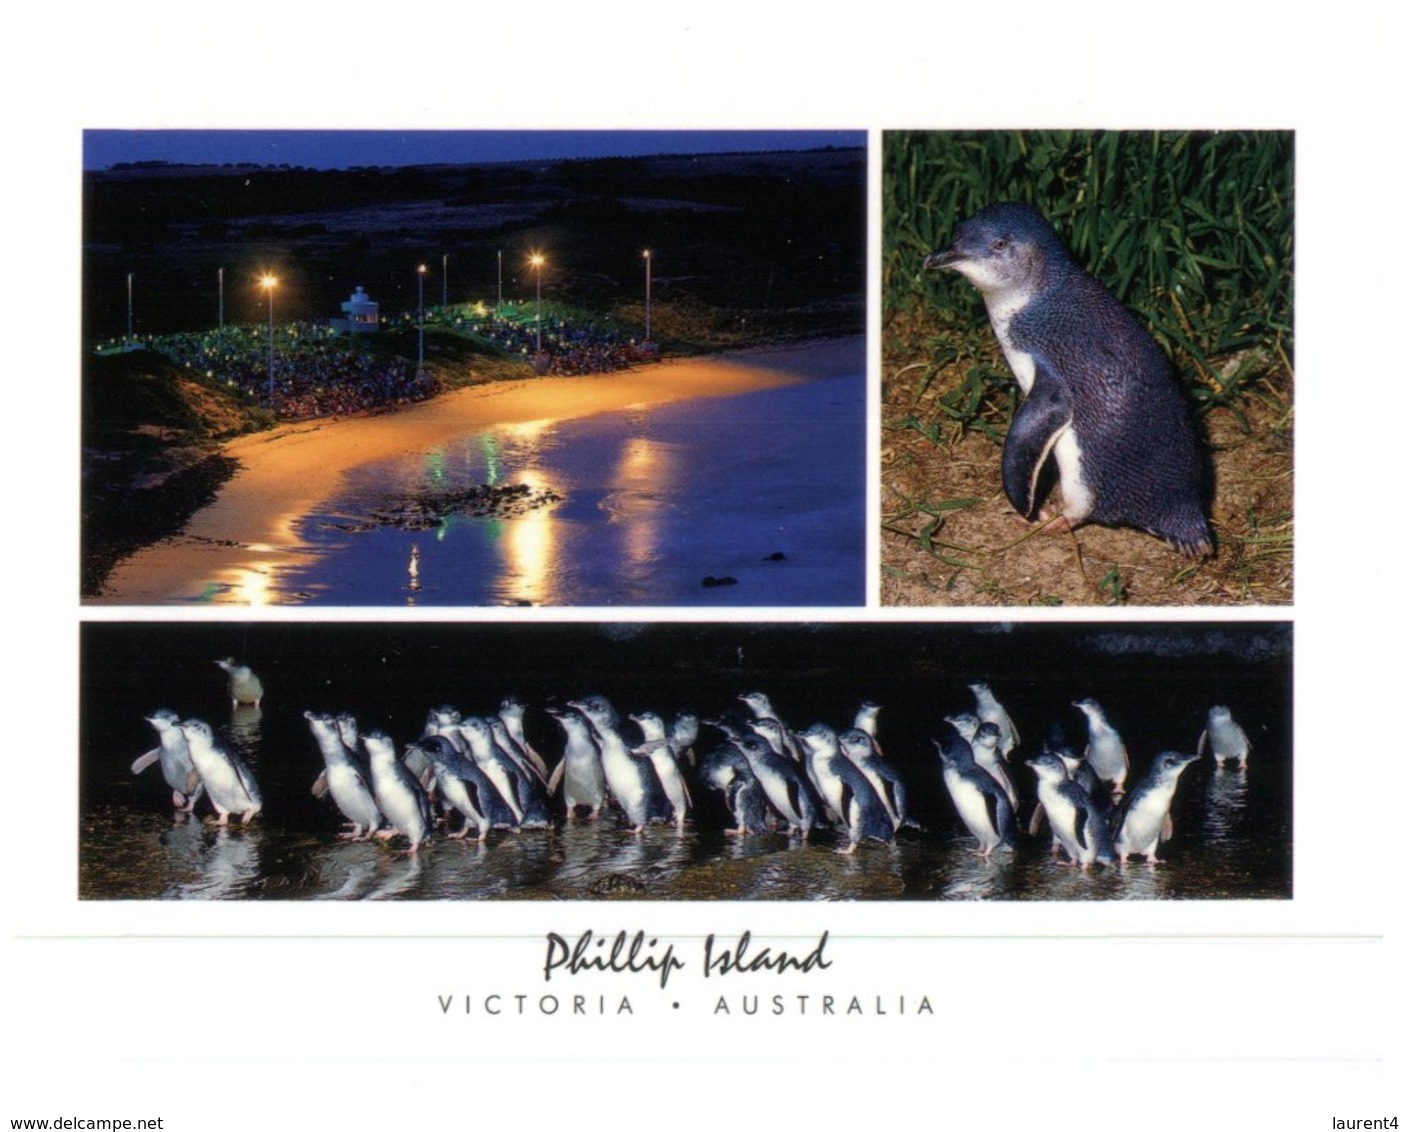 (100) Australia - VIC - Phillip Island - Mornington Peninsula